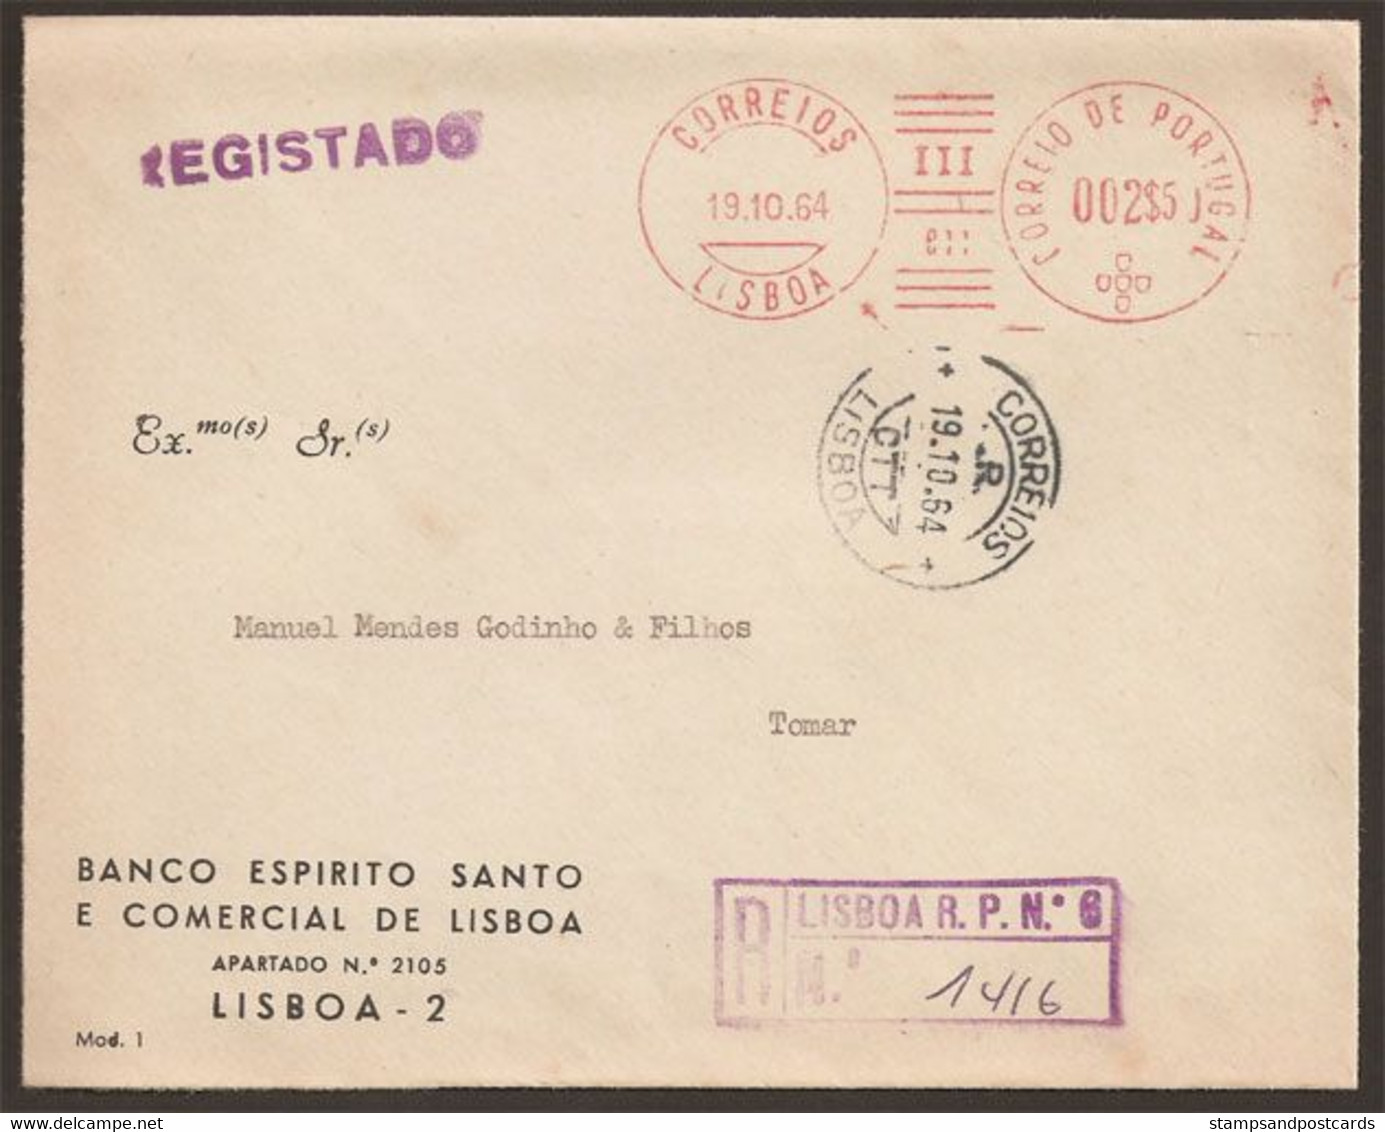 Portugal EMA Cachet Rouge Banque BESCL 1964 Recommandée Privé Nº 6 Meter Stamp BESCL Bank Private Registration Nº 6 - Franking Machines (EMA)